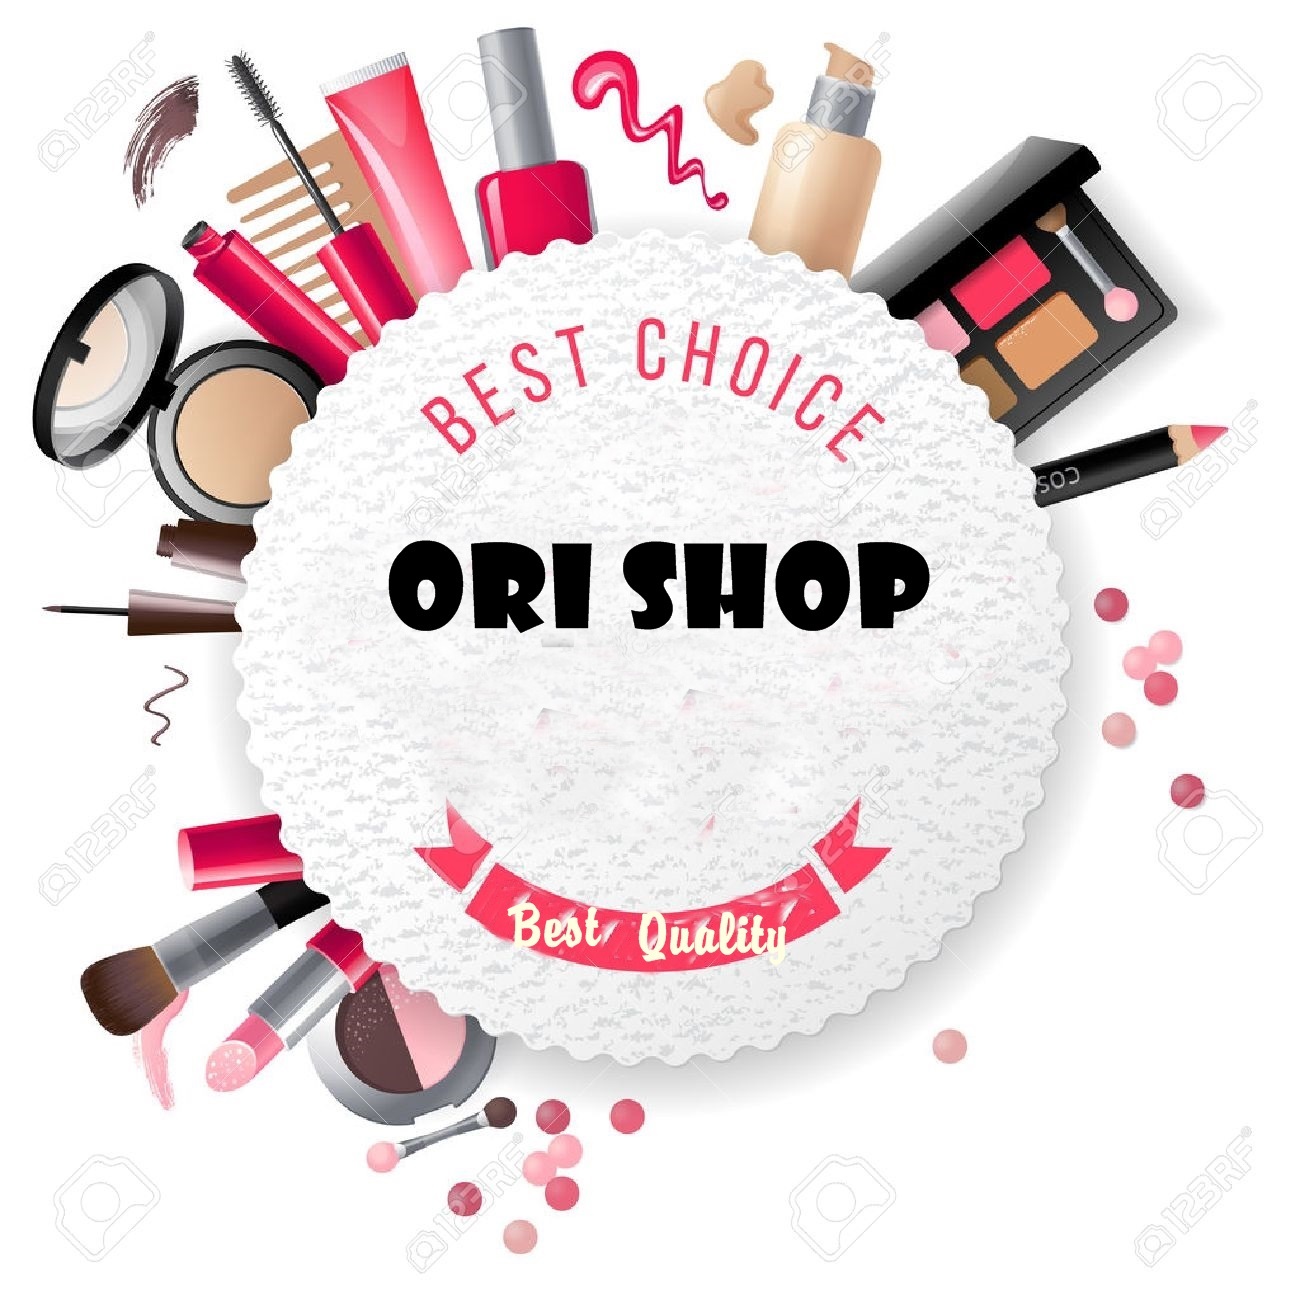 Ori Shop